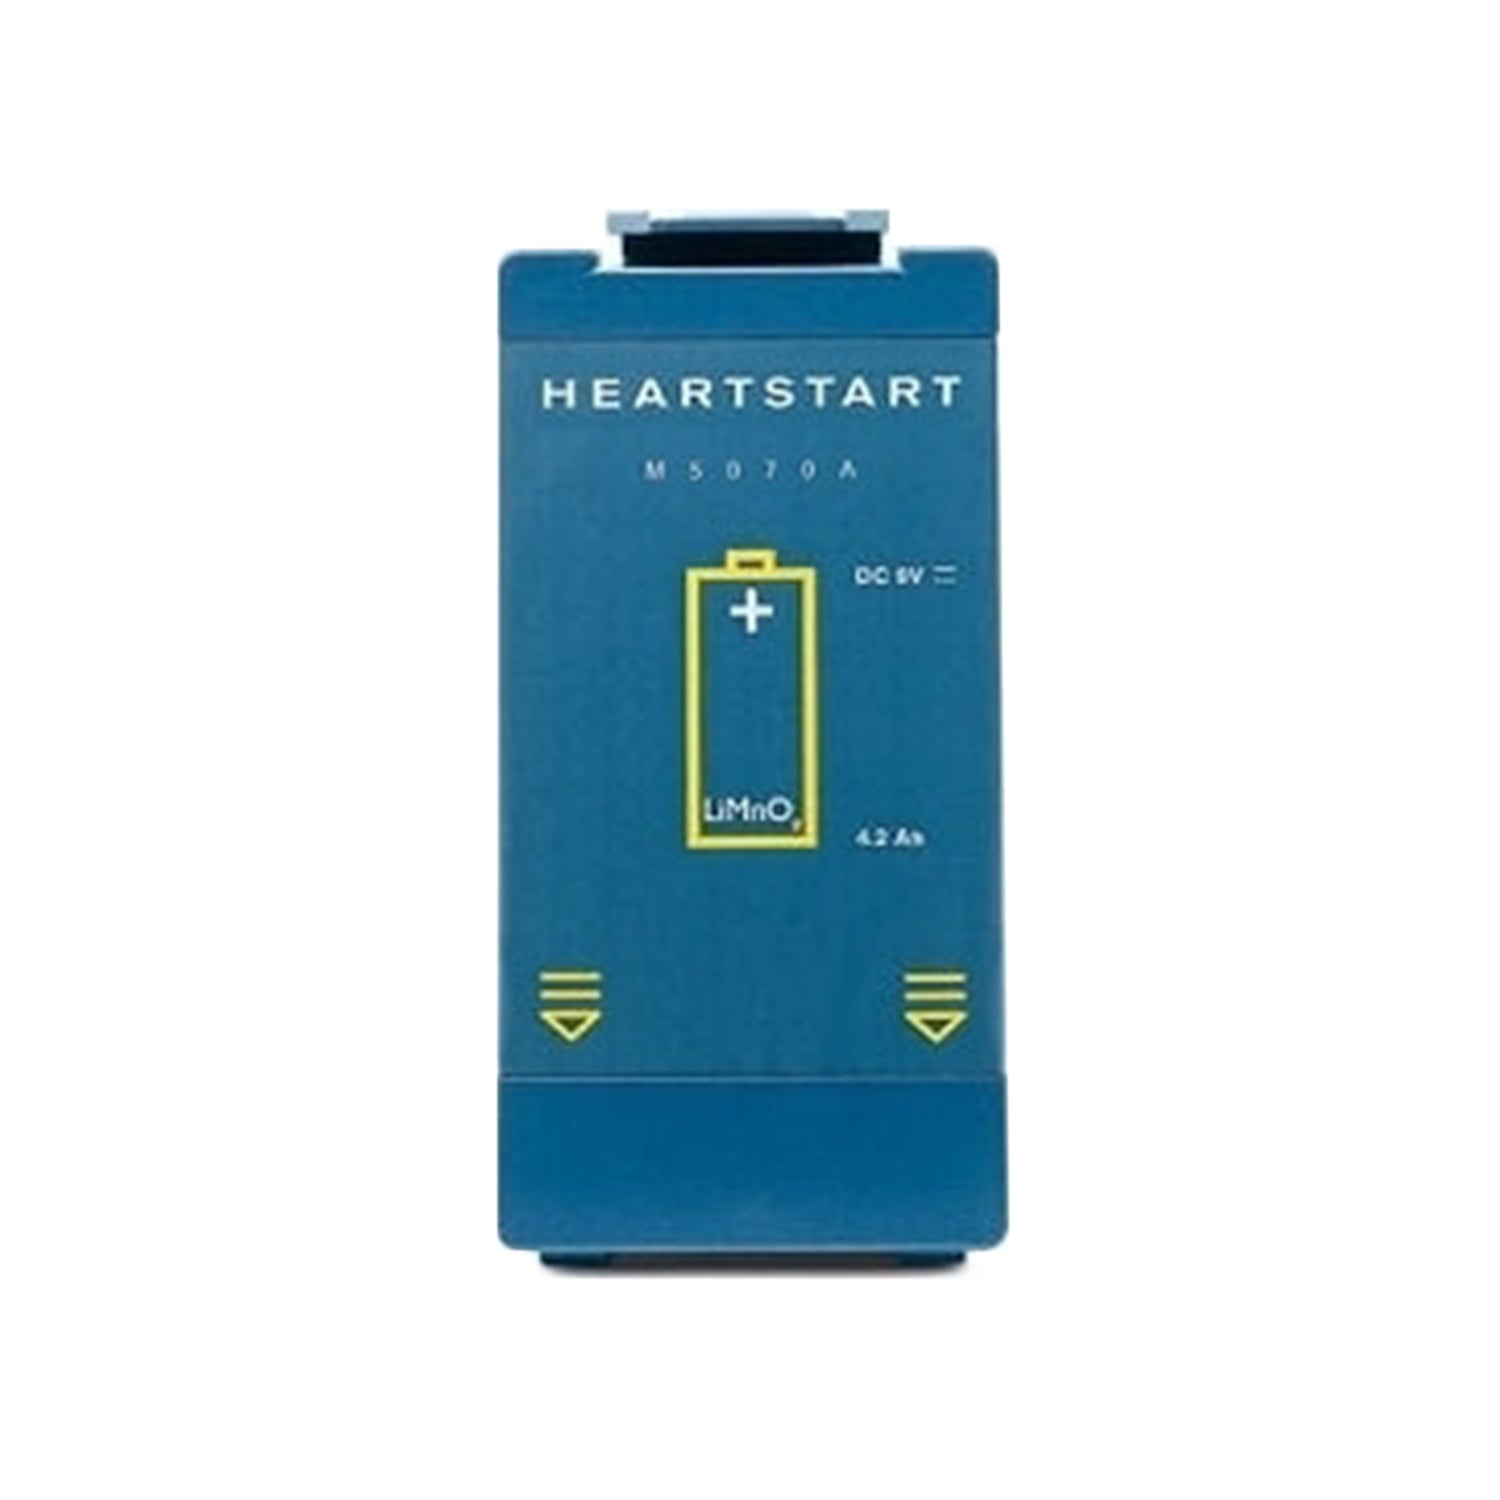 Philips HeartStart AED - Onsite Automated External Defibrillator